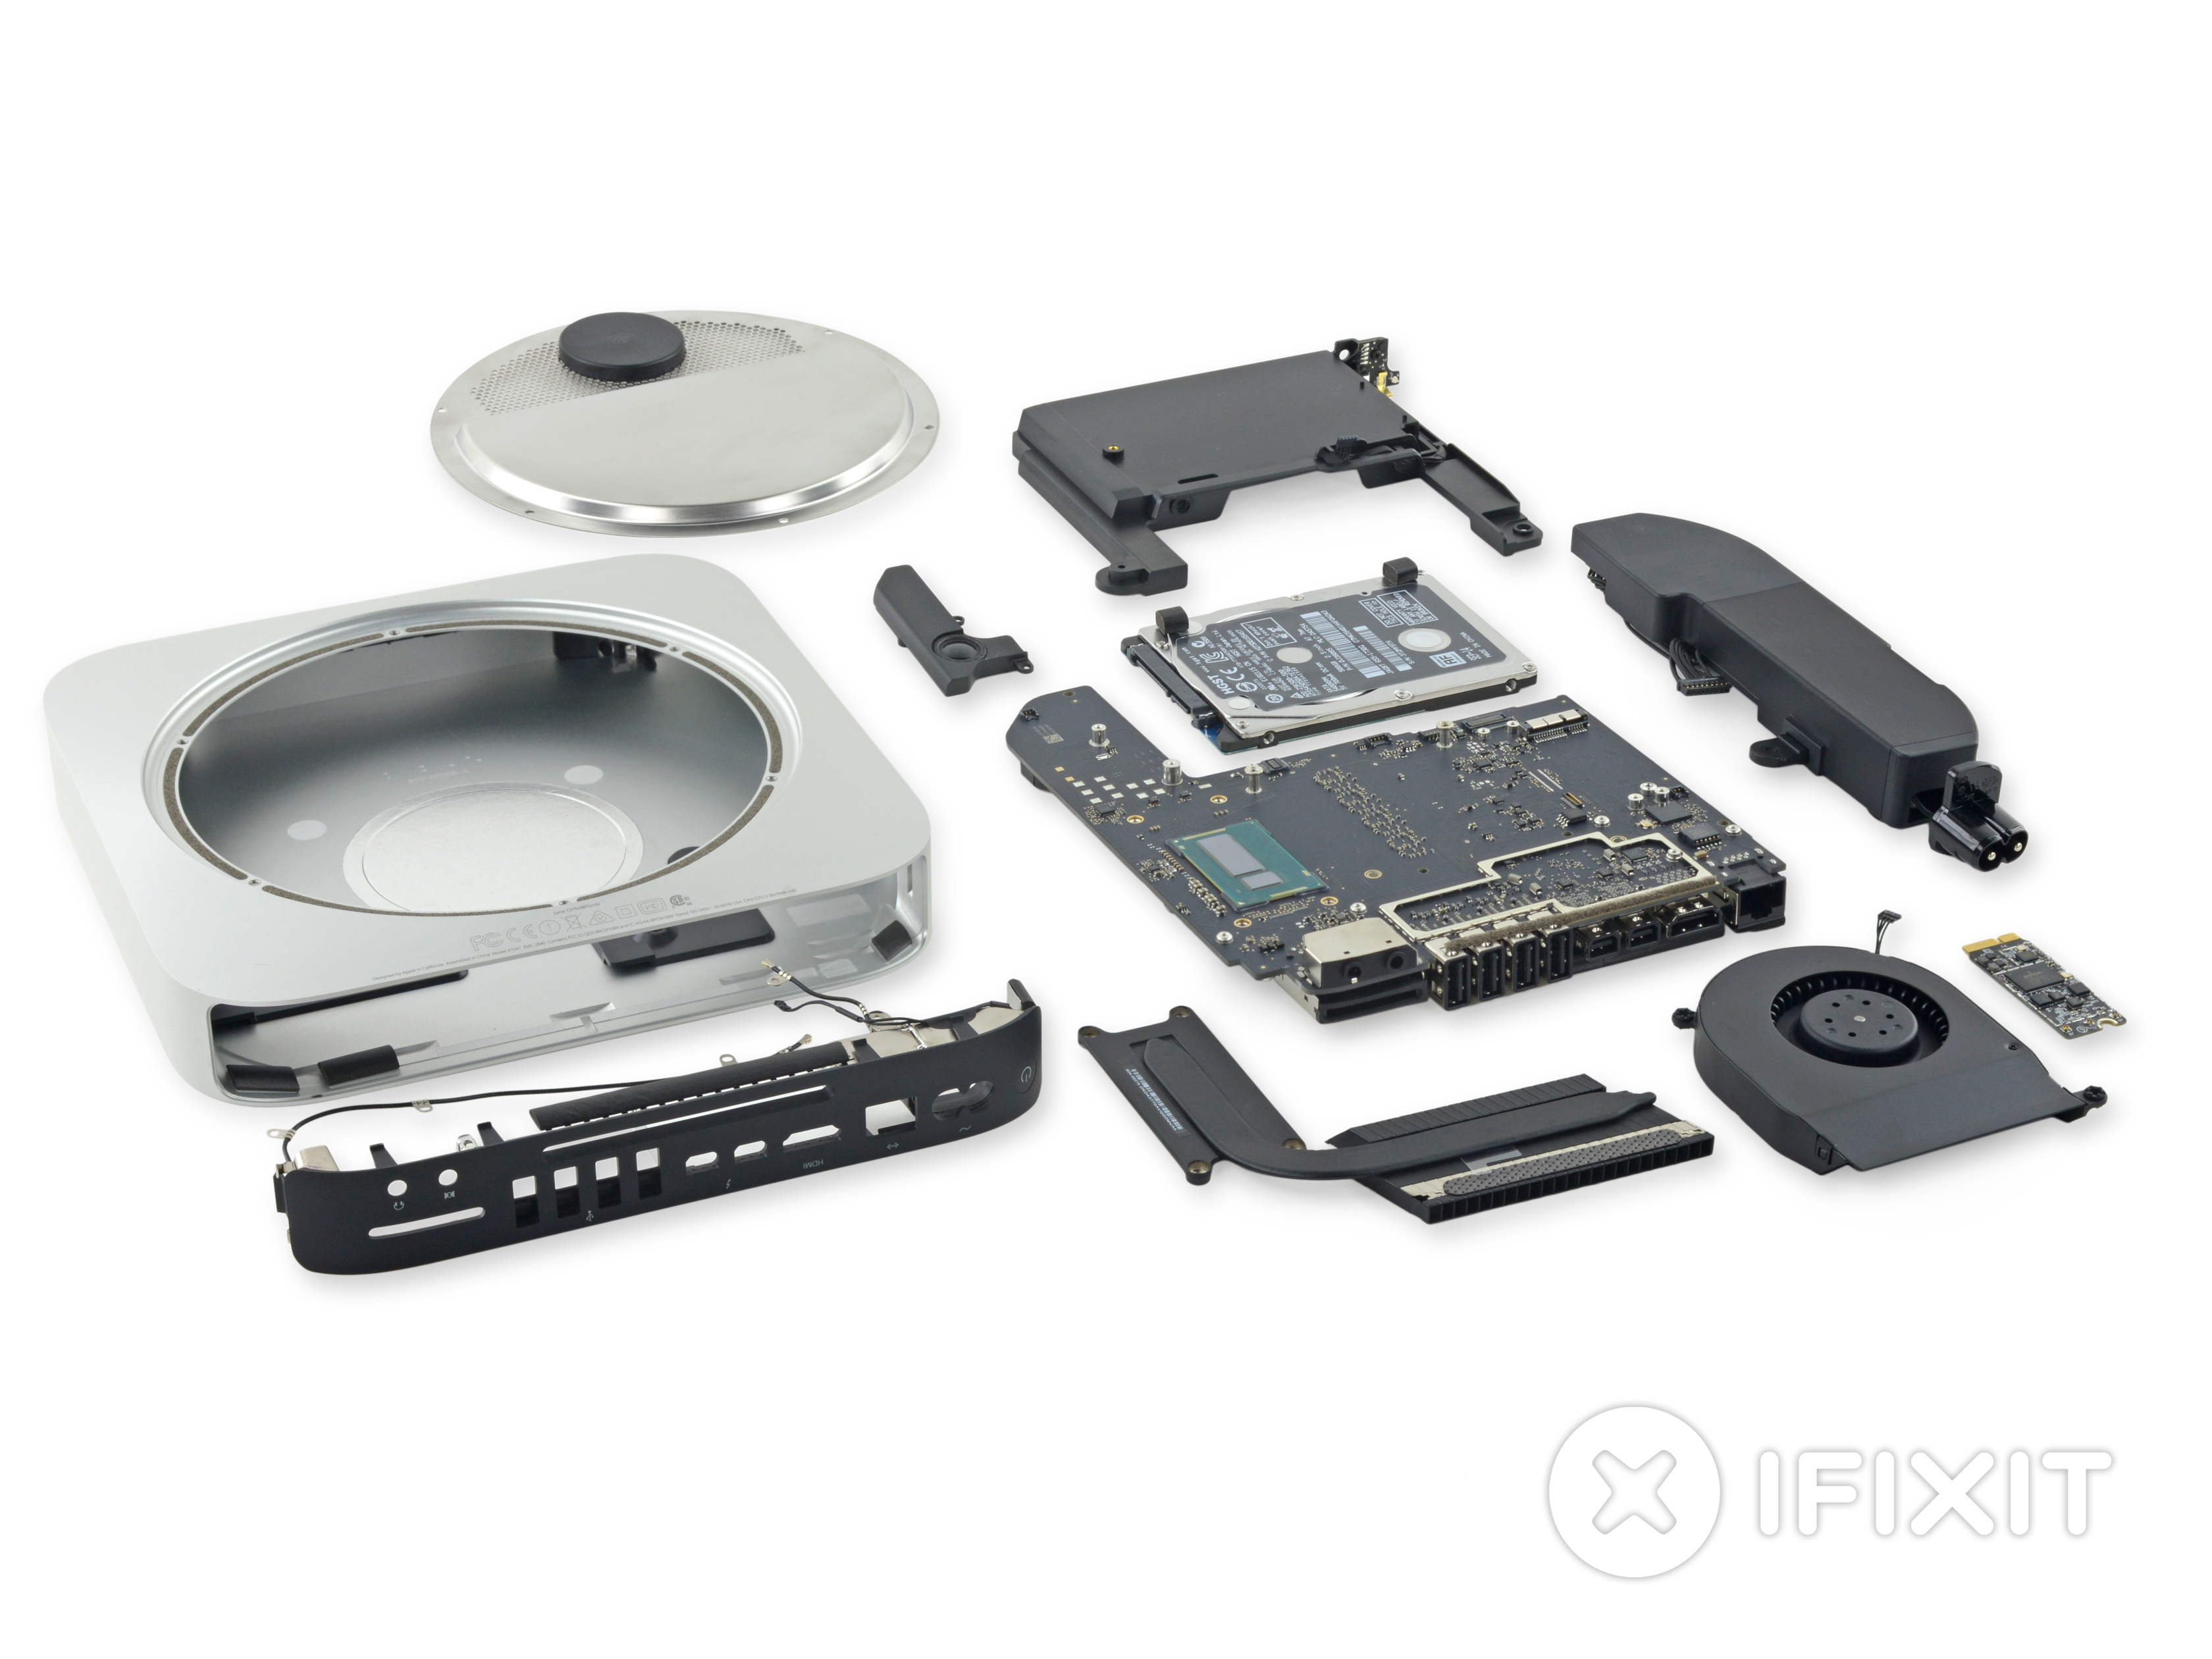 iFixit disassembles the new Mac mini